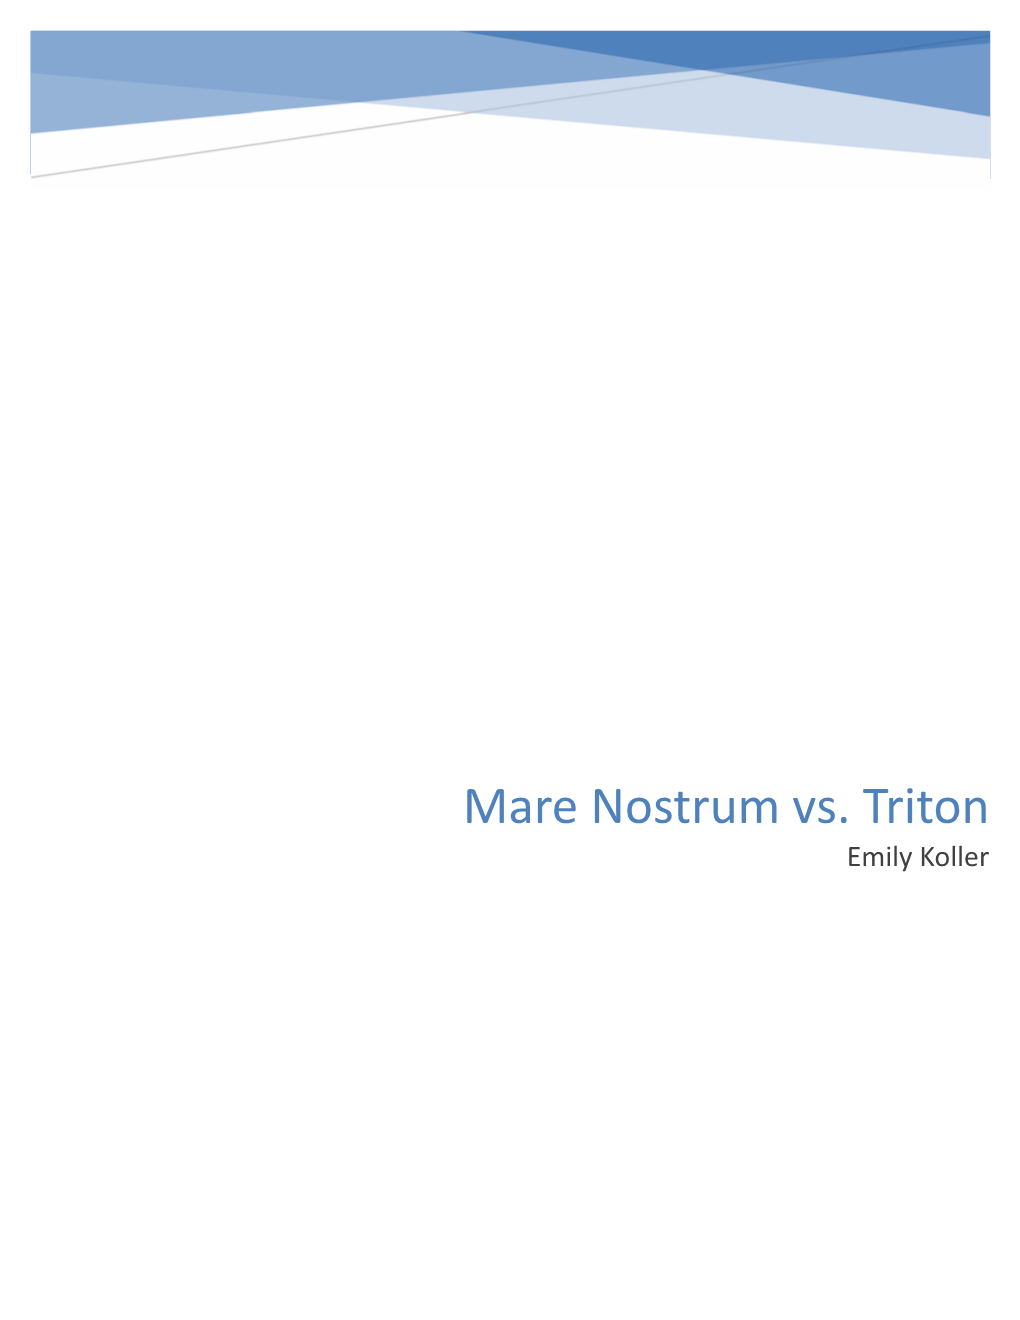 Mare Nostrum Vs. Triton Emily Koller Course on the European Union and the Politics of Migration